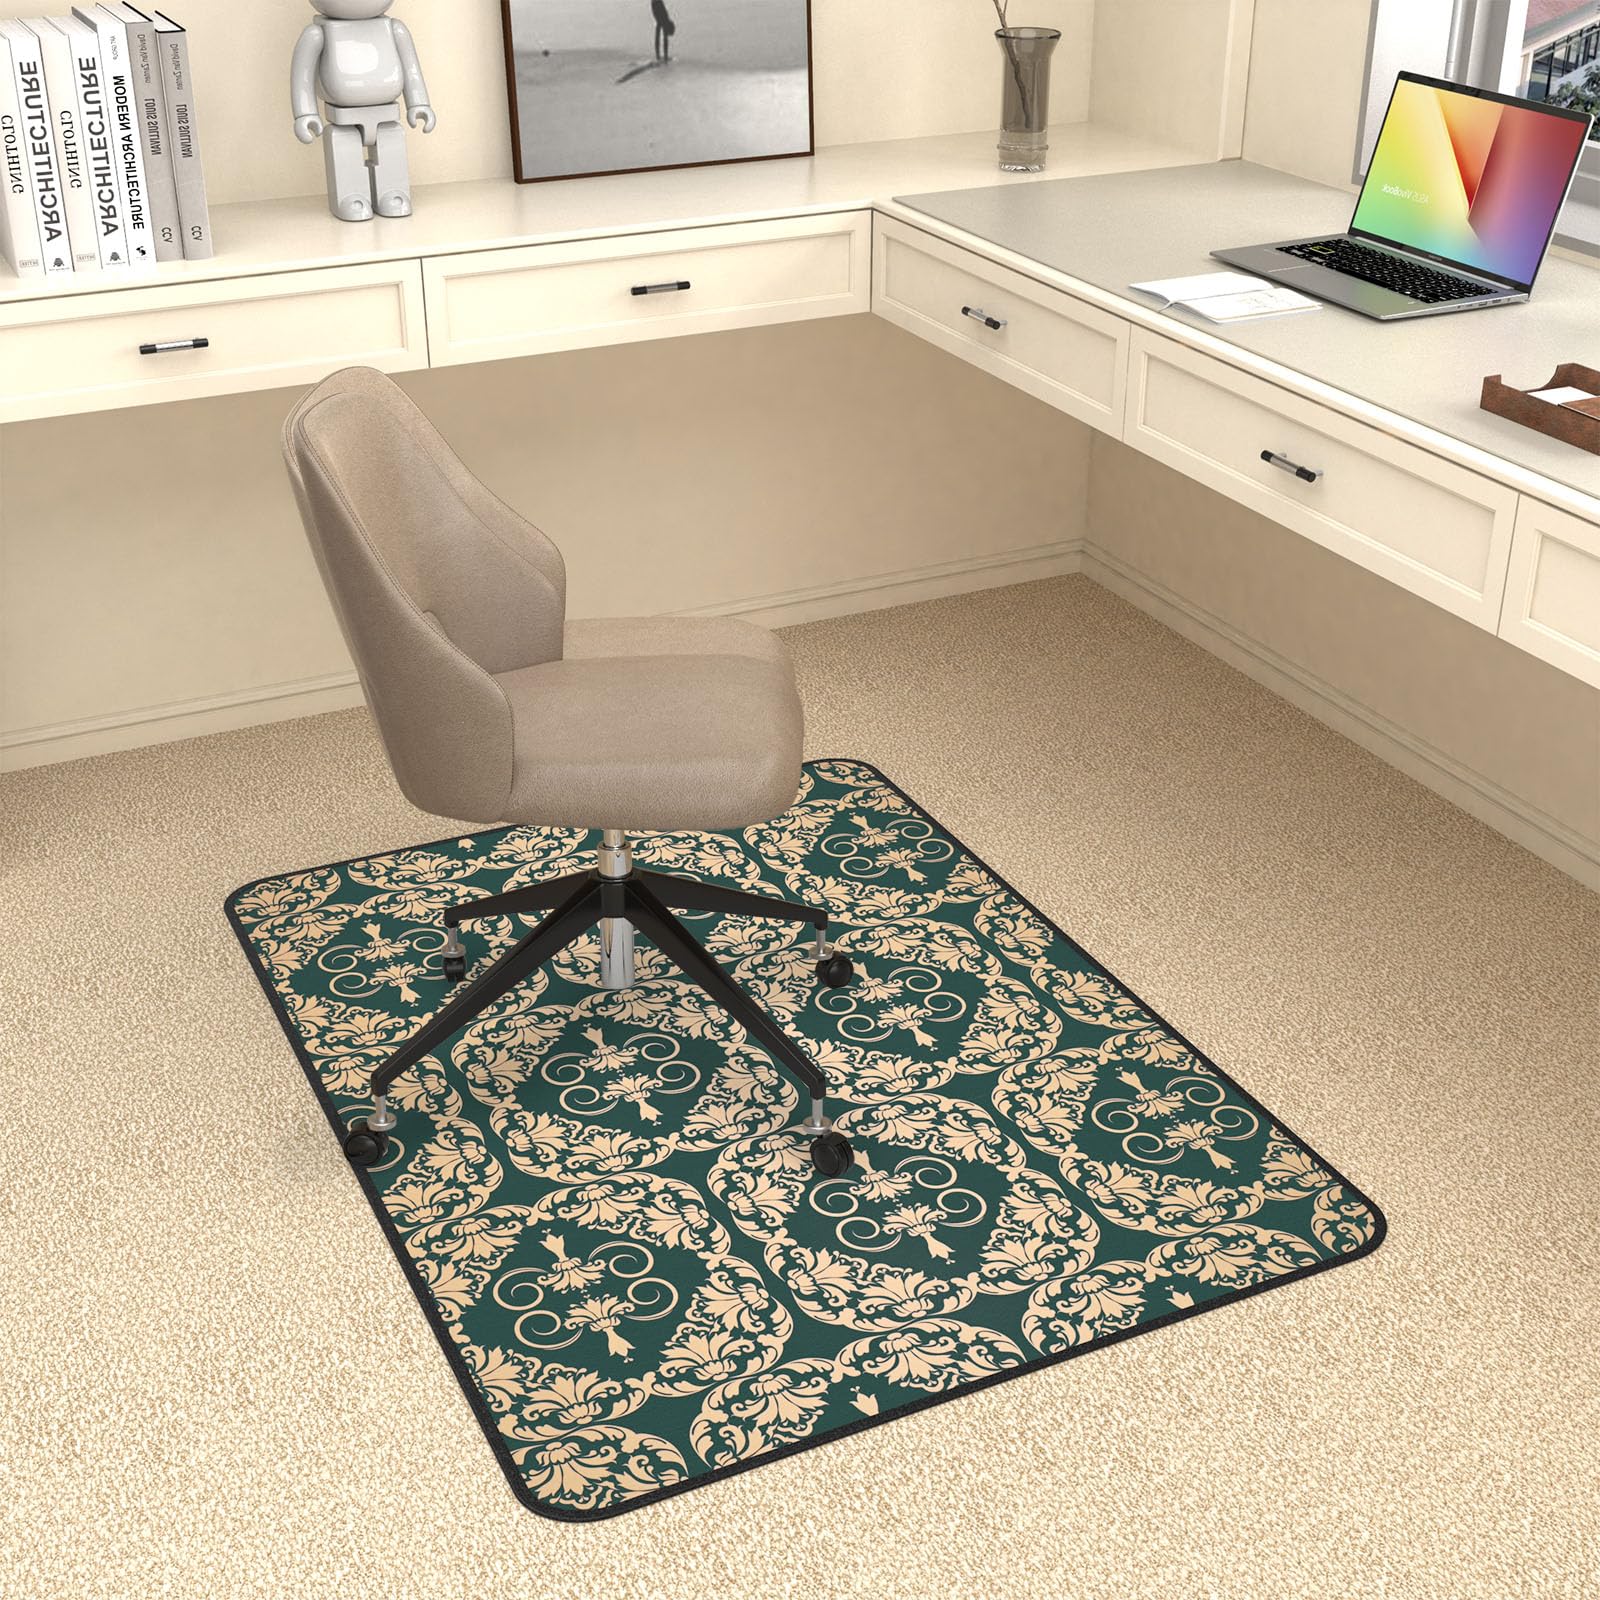 Mapuon Heavy Duty Desk Chair Mat for Carpet & Hardwood Floors, 48" x 36" Exquisite Jacquard Floor Mat Office Chair Mat for Carpeted Floors and Hardwood Floor for Home Office